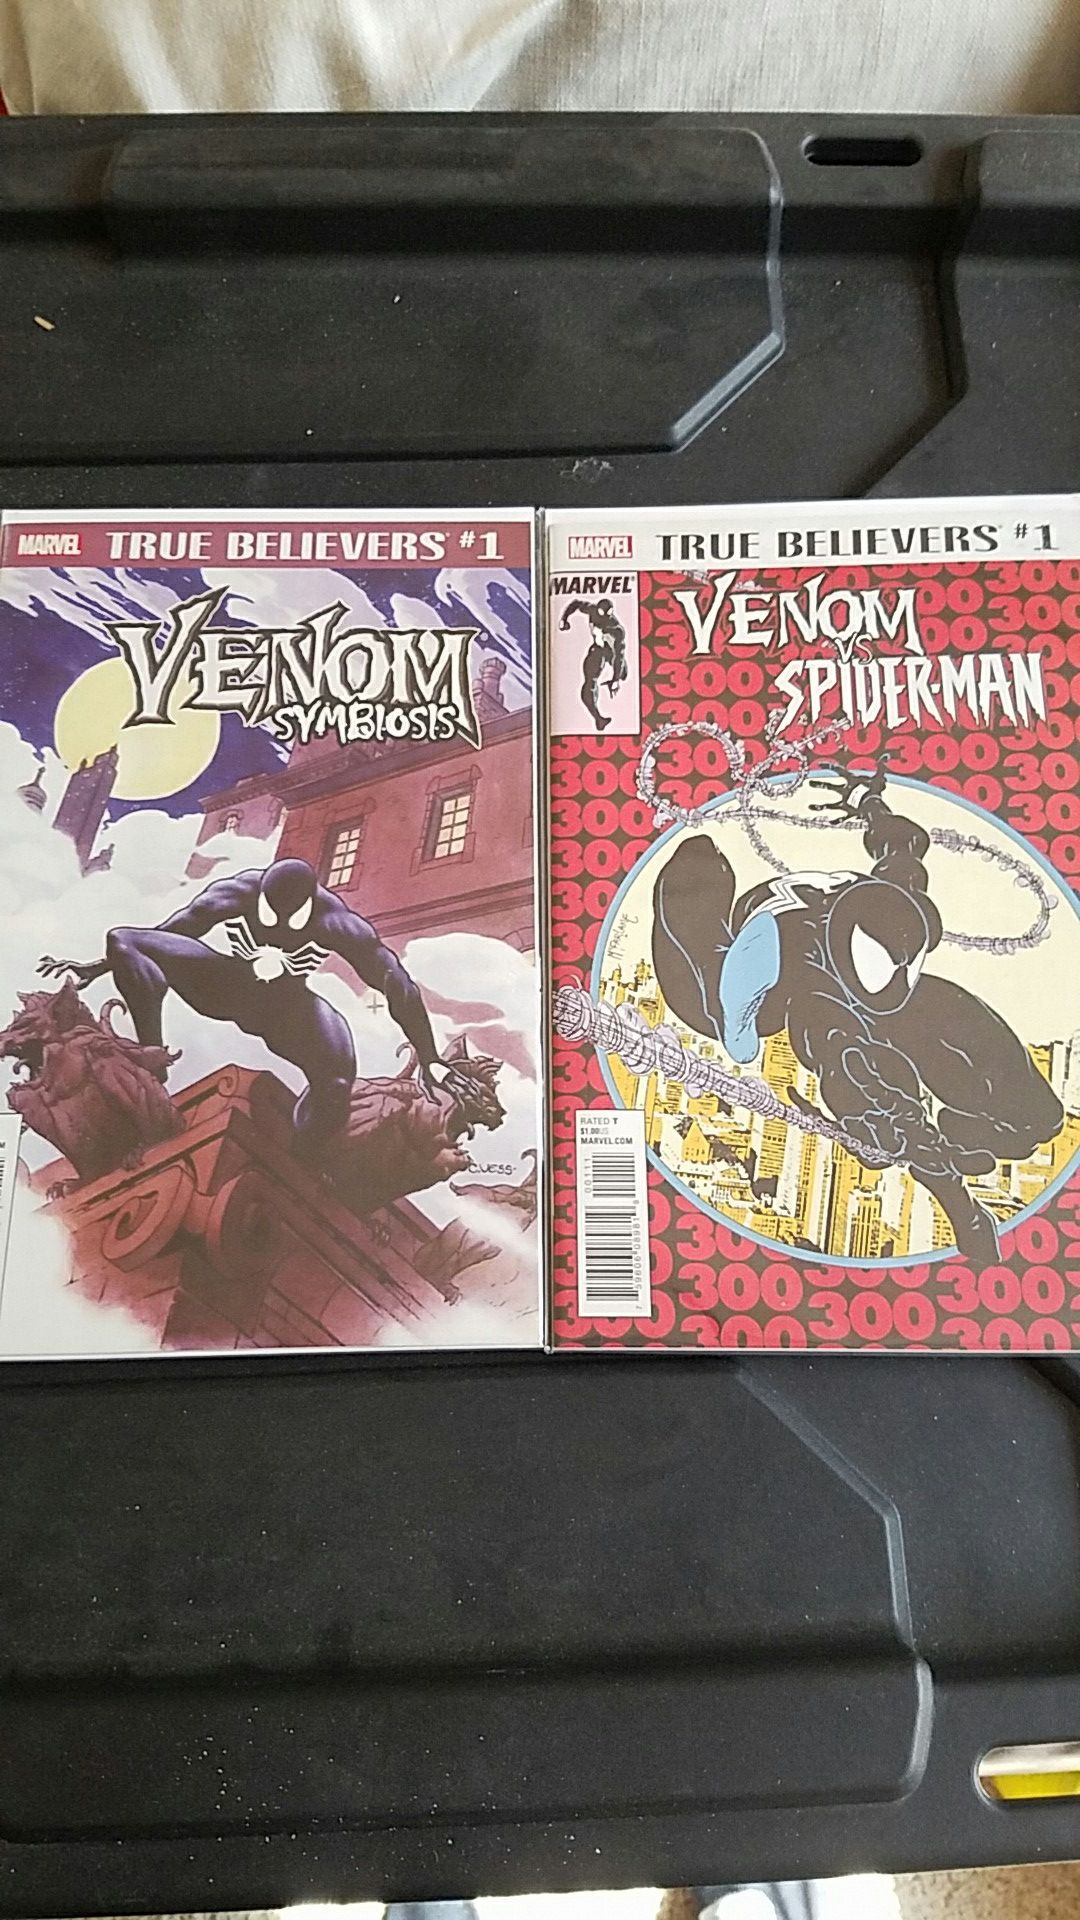 Mcfarlane Marvel comic books 300 spiderman venom symbiosis #1